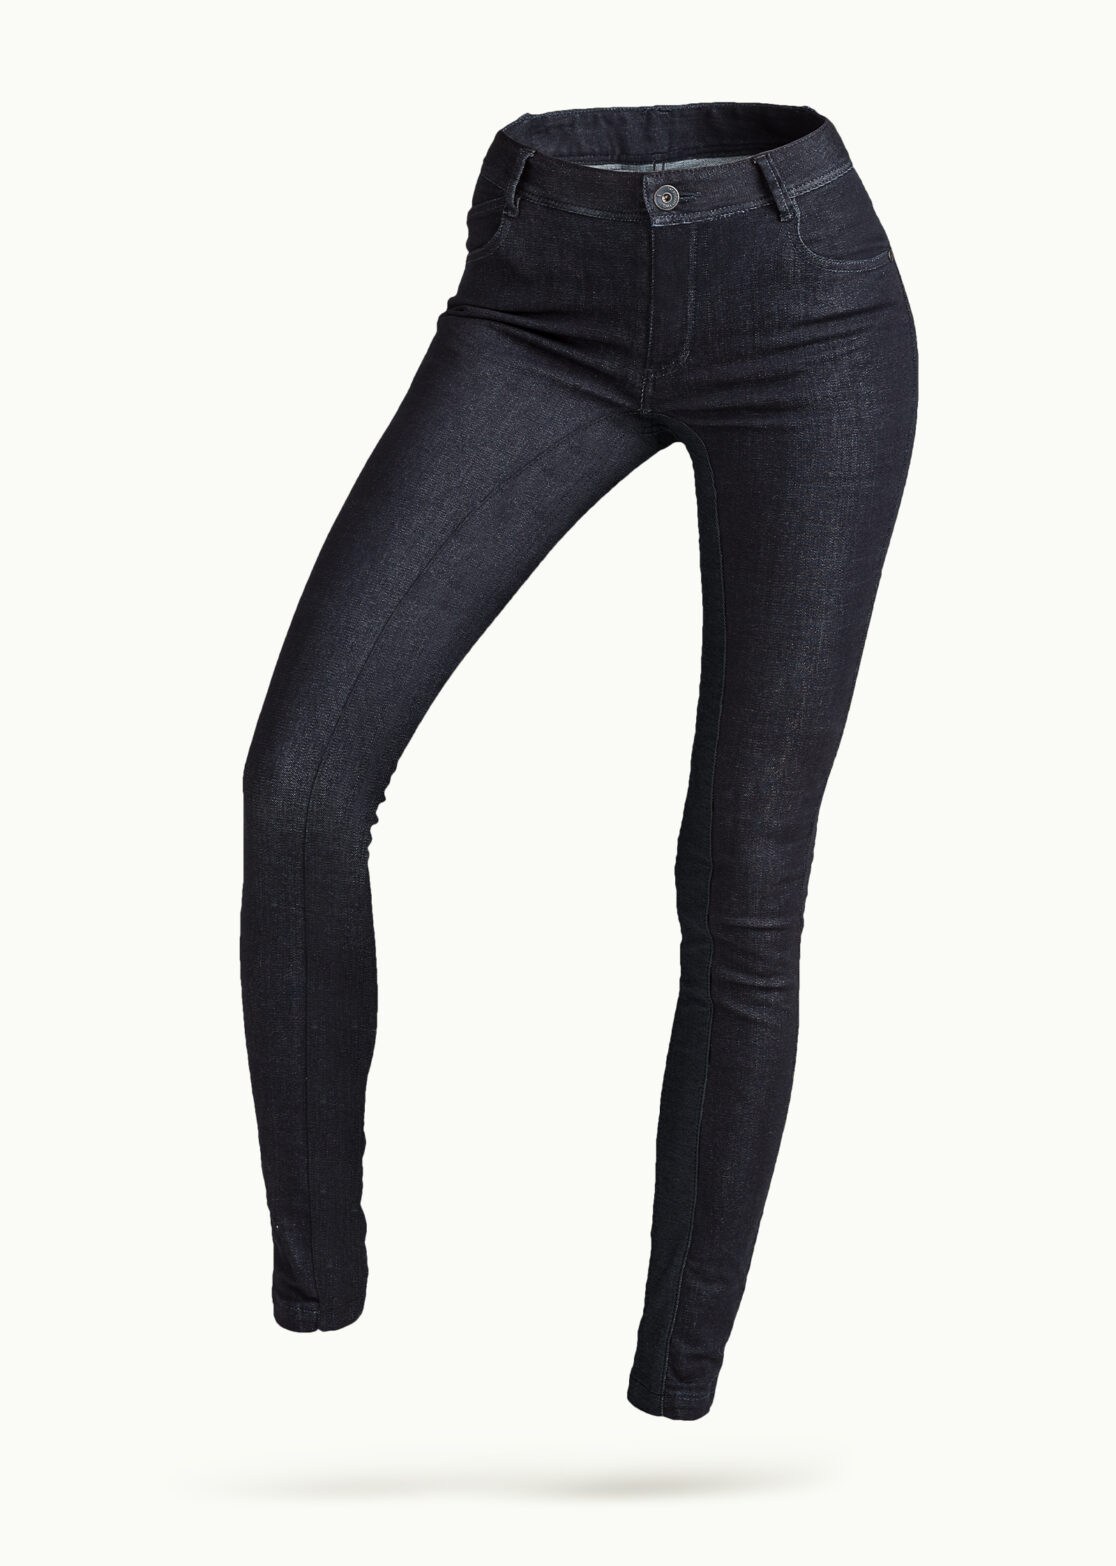 SALE - Women - Denim - Jeans - Visionary Pants Superskinny Mono Image Primary